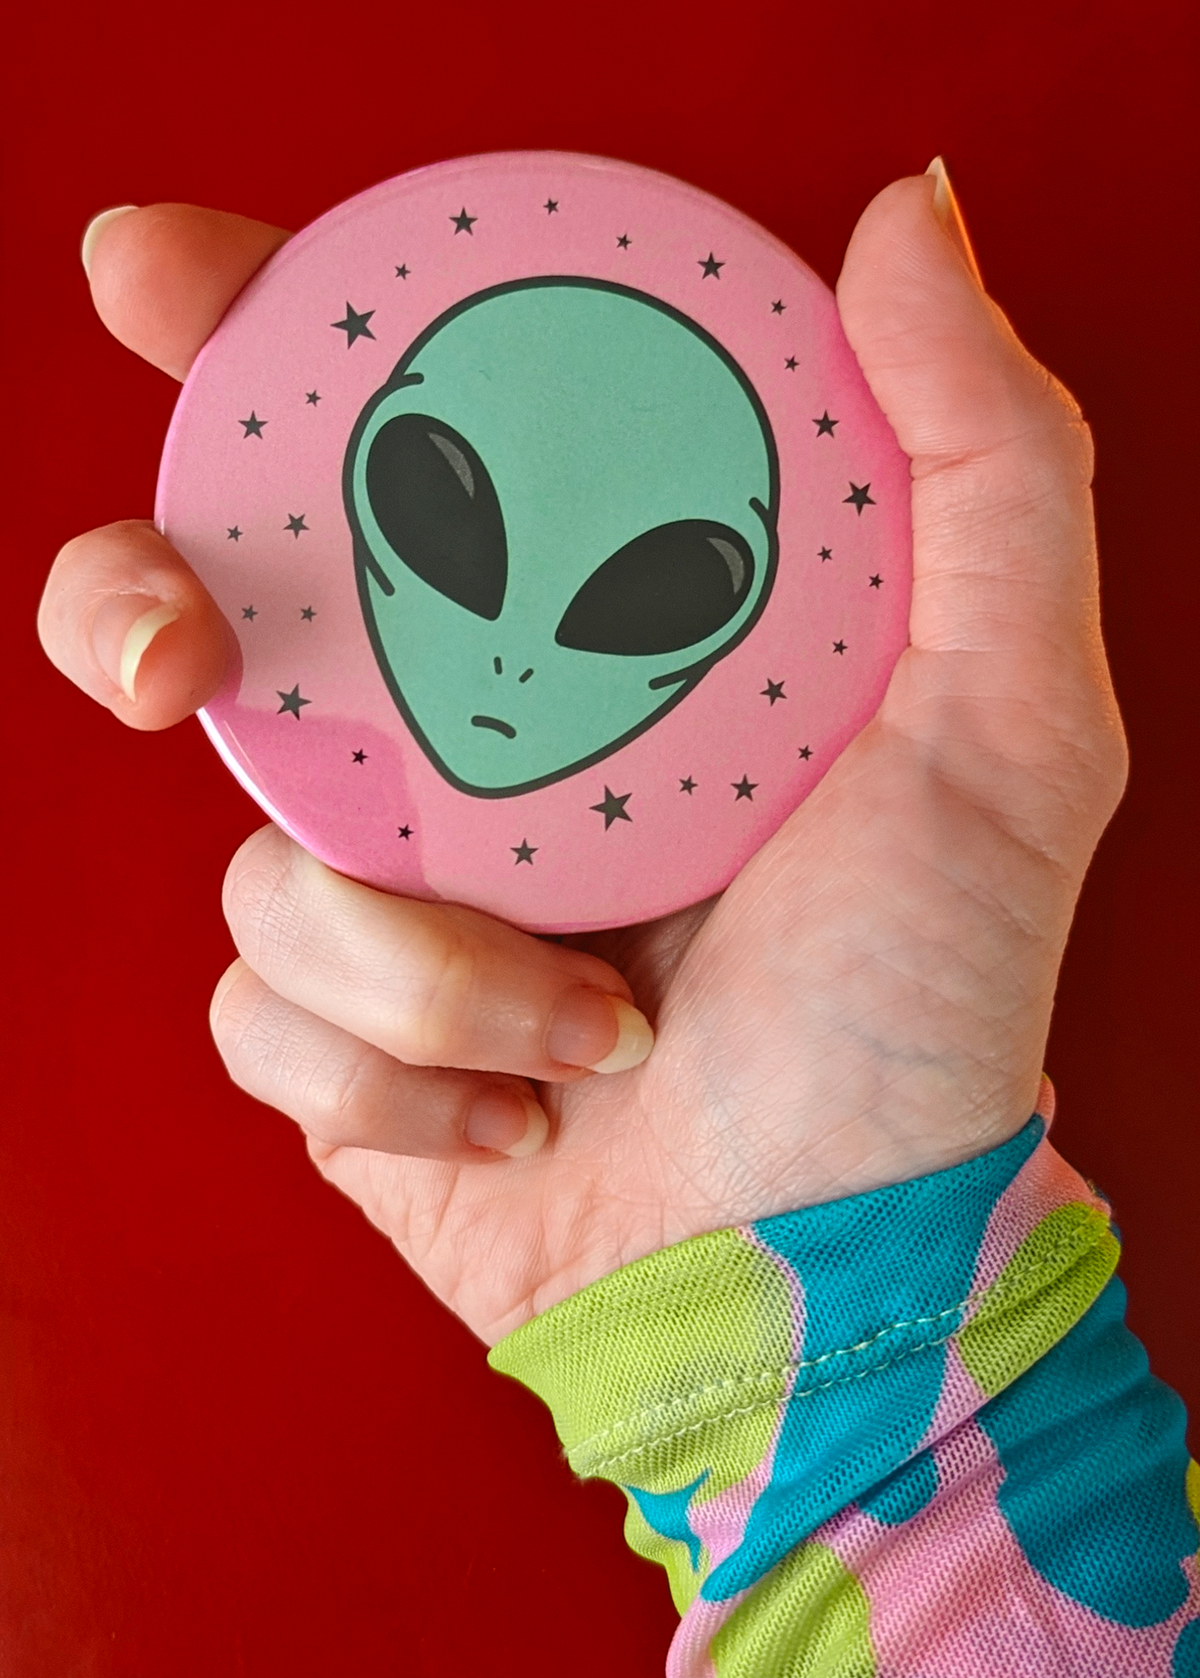 Alien Face Mini Pocket Mirror in Pink and Seafoam Green